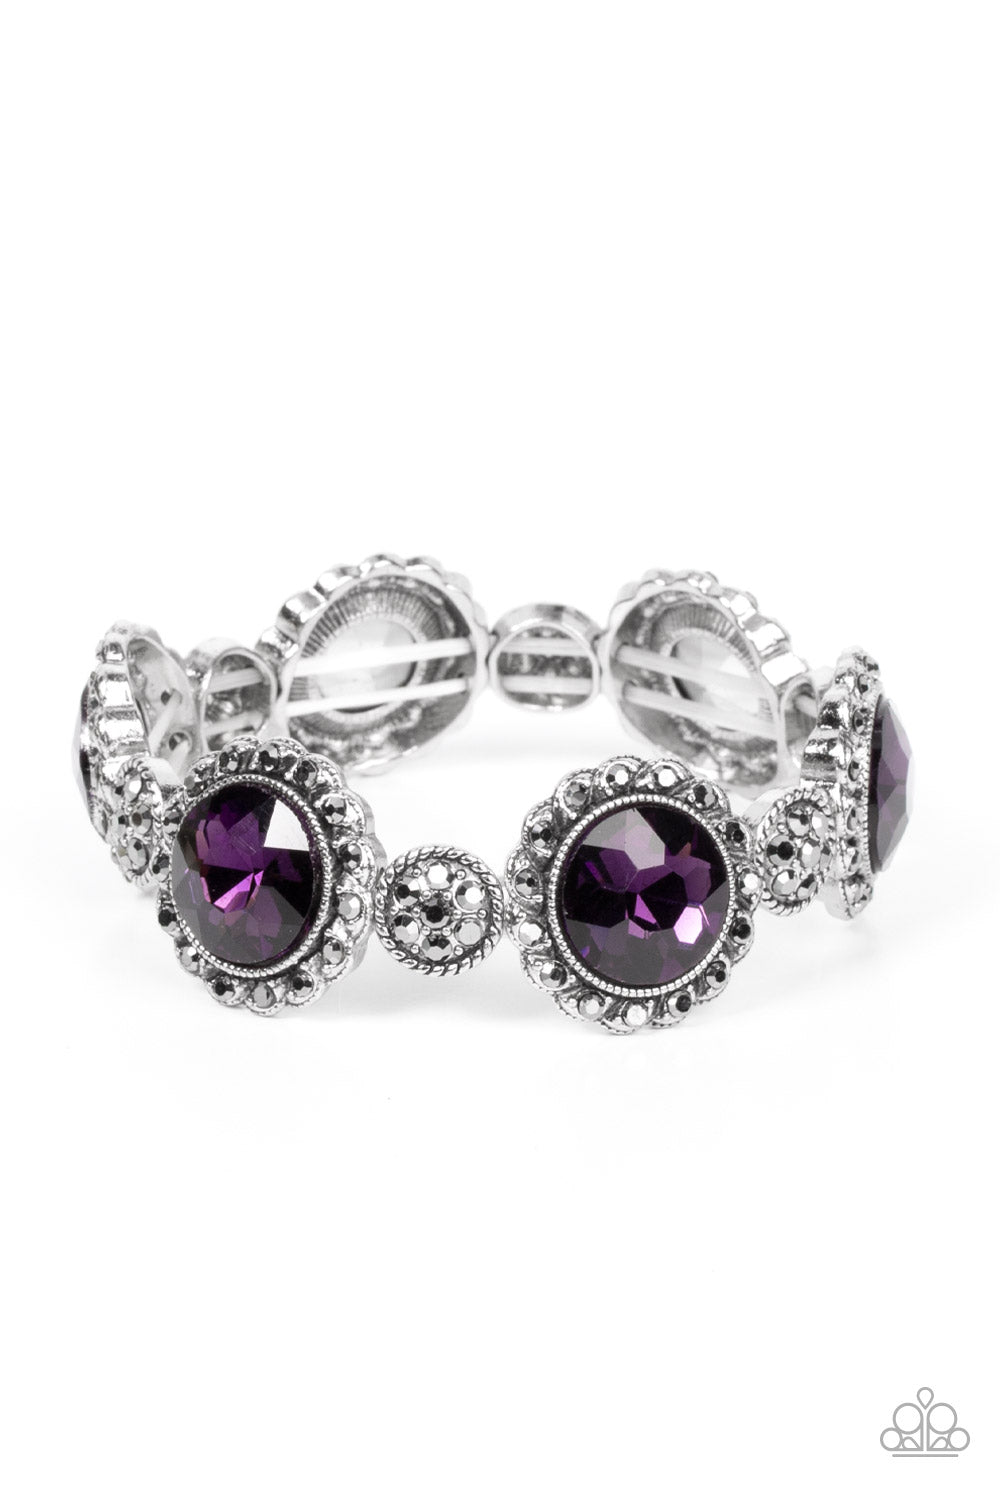 Palace Property Purple Rhinestone Bracelet - Paparazzi Accessories- lightbox - CarasShop.com - $5 Jewelry by Cara Jewels